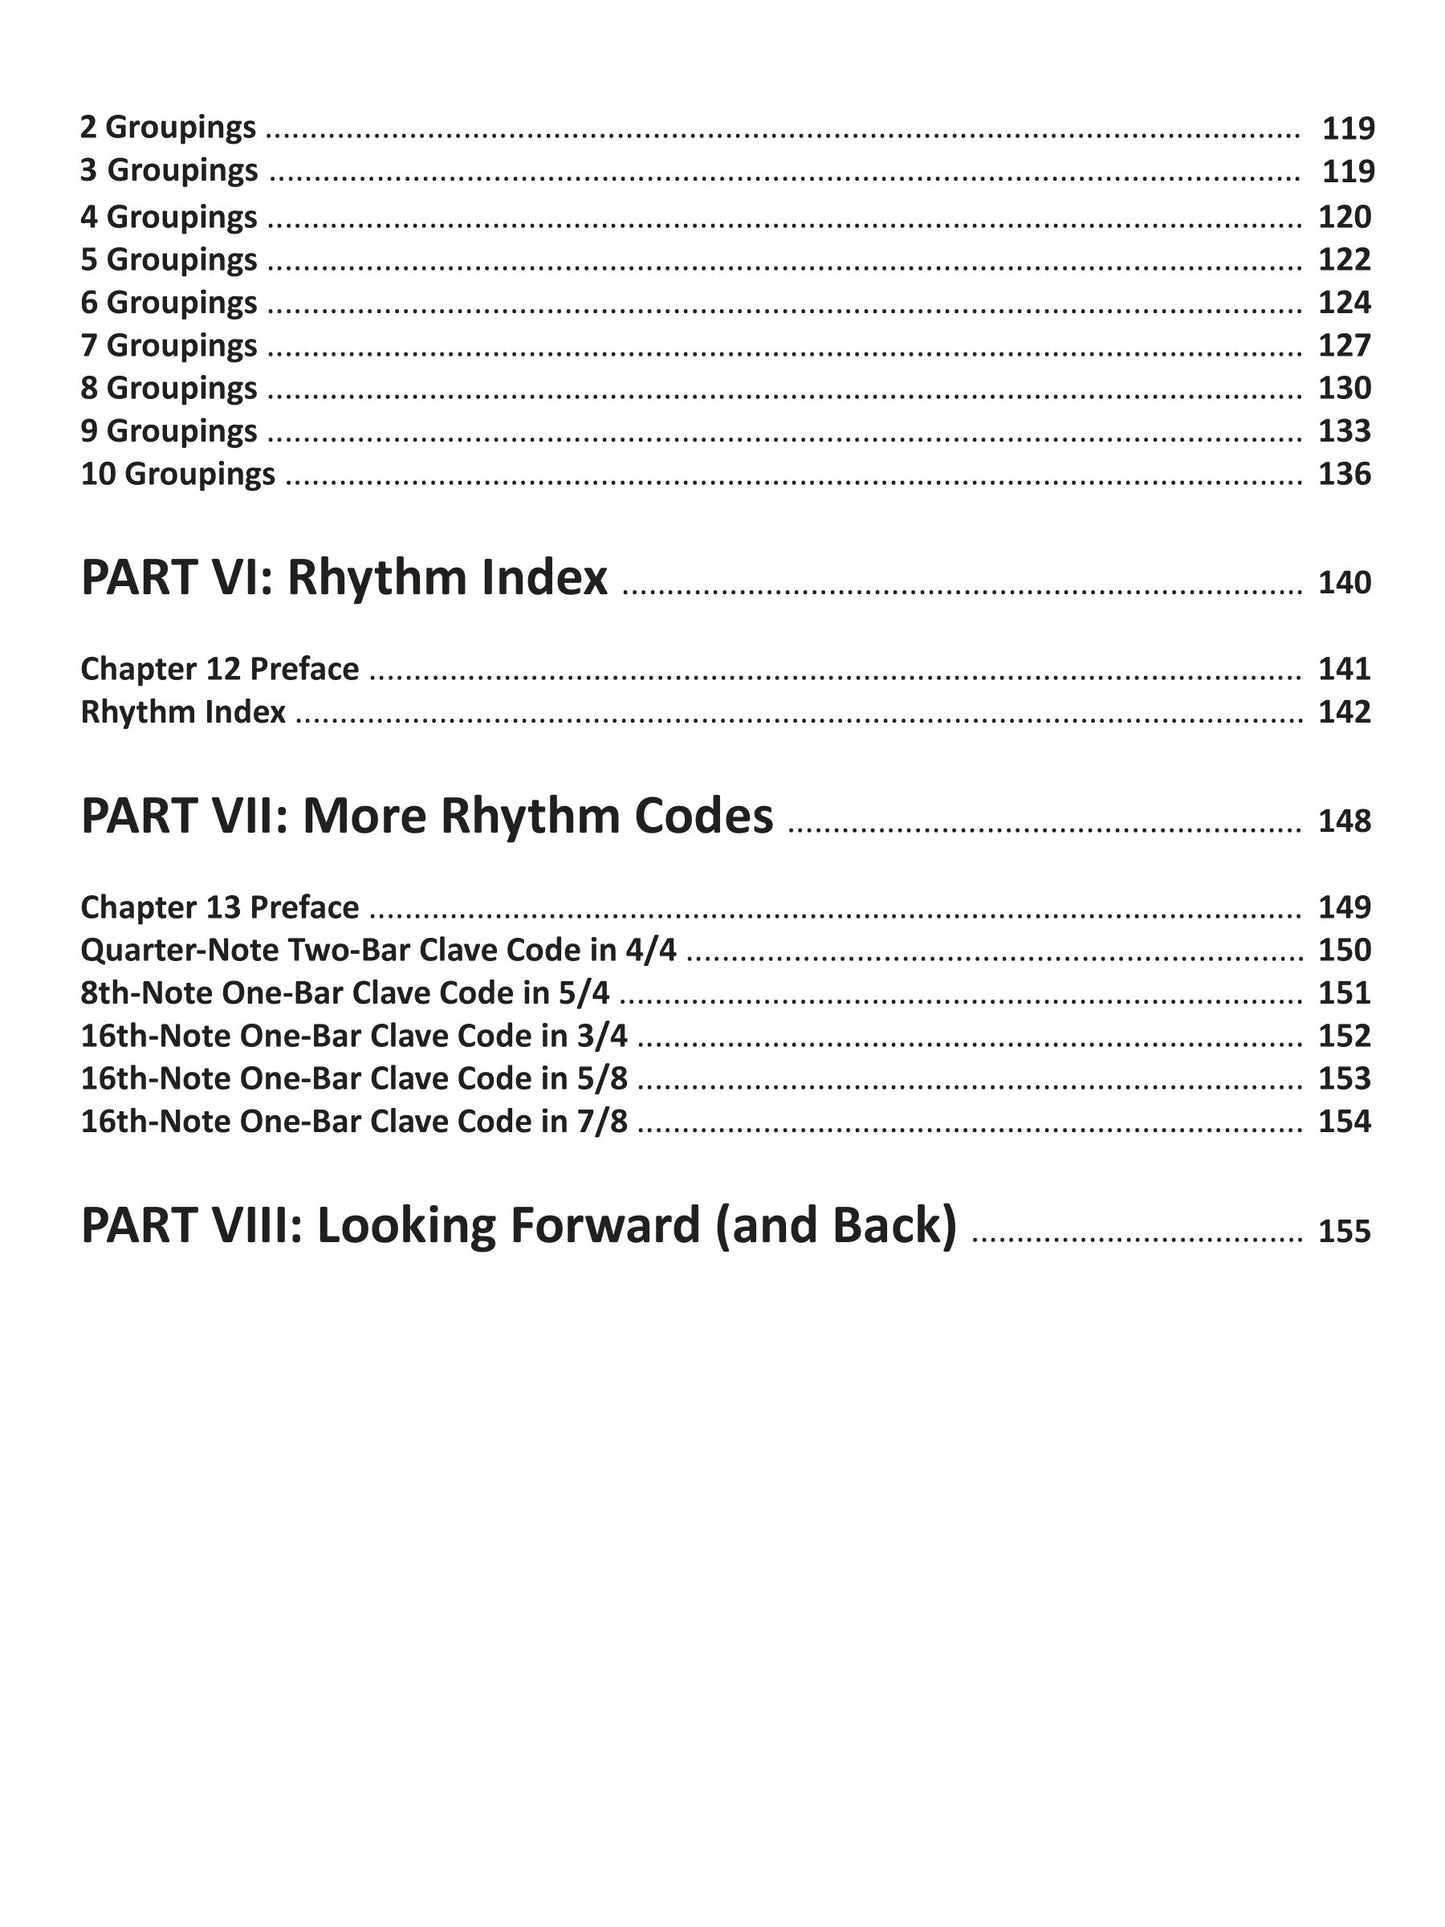 Fluid Fills and Musical Phrasing - Drum Method Book